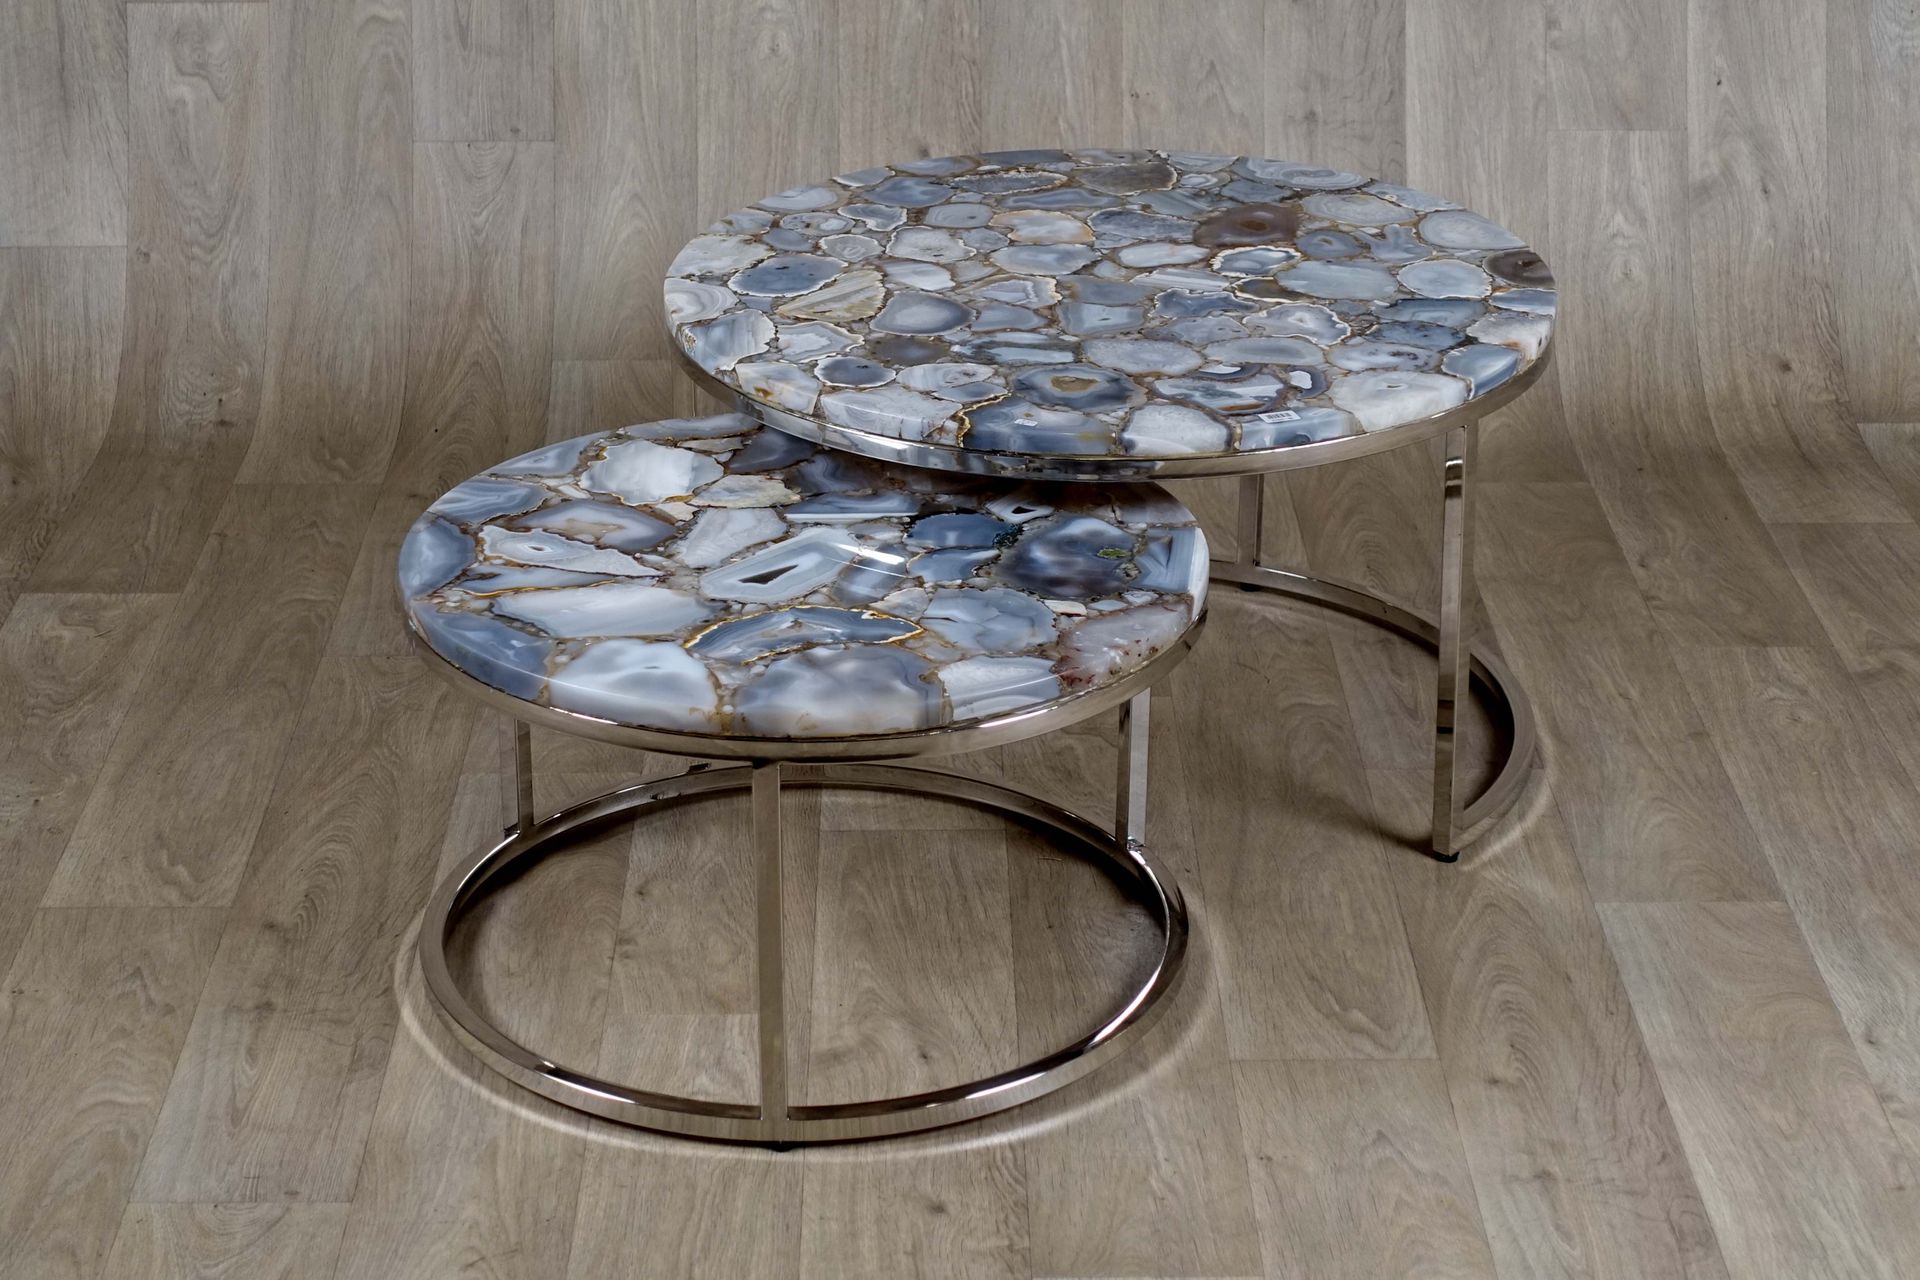 Paire de Tables gigognes. 圆形，有玛瑙片制成的架子。镀铬金属腿。当代工作。尺寸：45 x 80 x 80厘米。